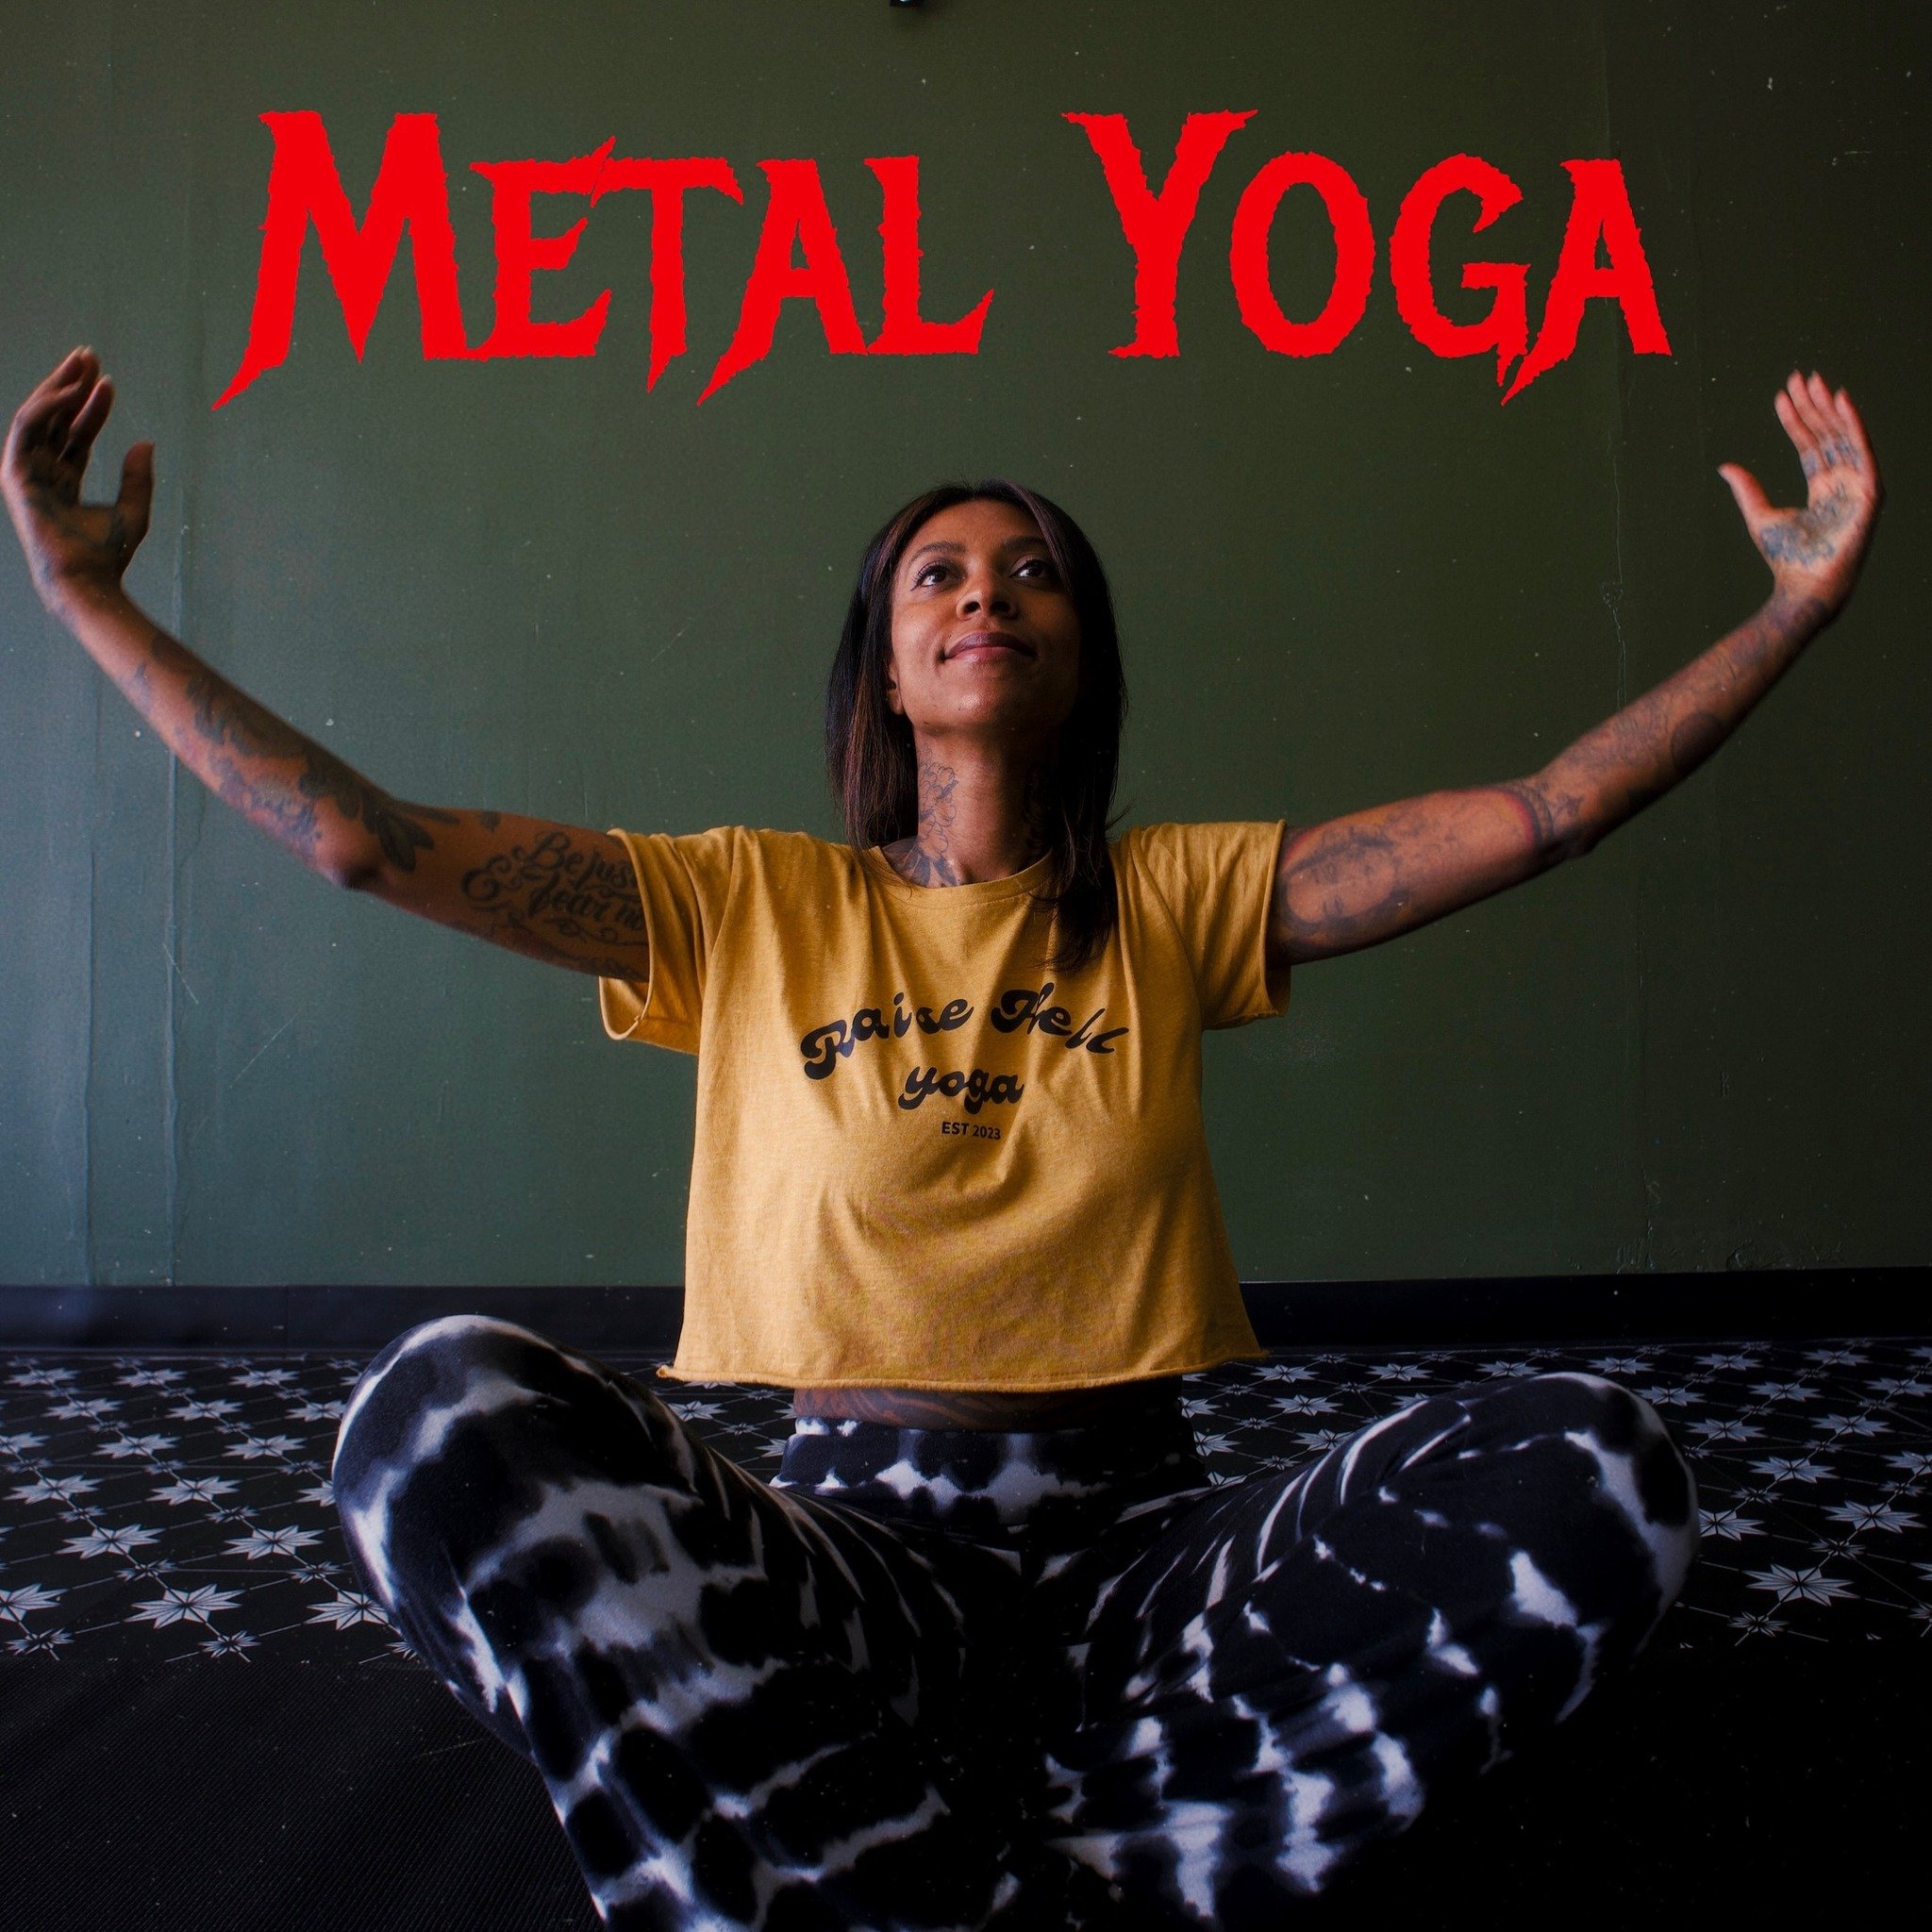 This is your sick 😉 reminder to sign up Metal Yoga with @raisehell_yoga 

Try something different 👀 

🖤 

🖤

🖤

#yogaclasses #woodstockyoga #atlyoga #atlyogacommunity #atlspirituality #atlevents